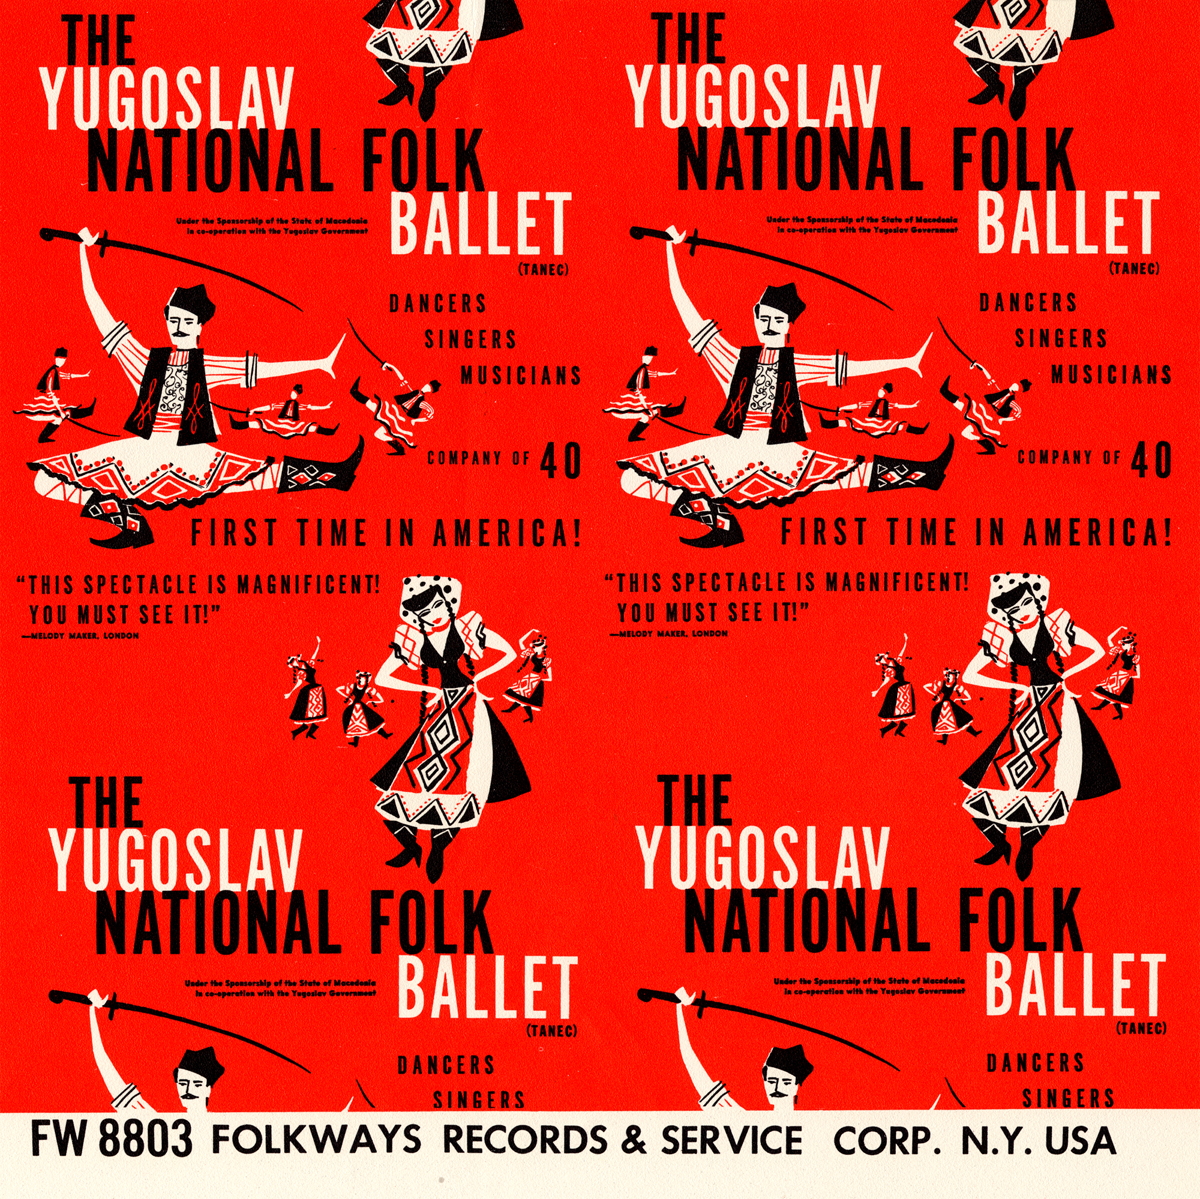 THE YUGOSLAV NATIONAL FOLK BALLET (TANEC)